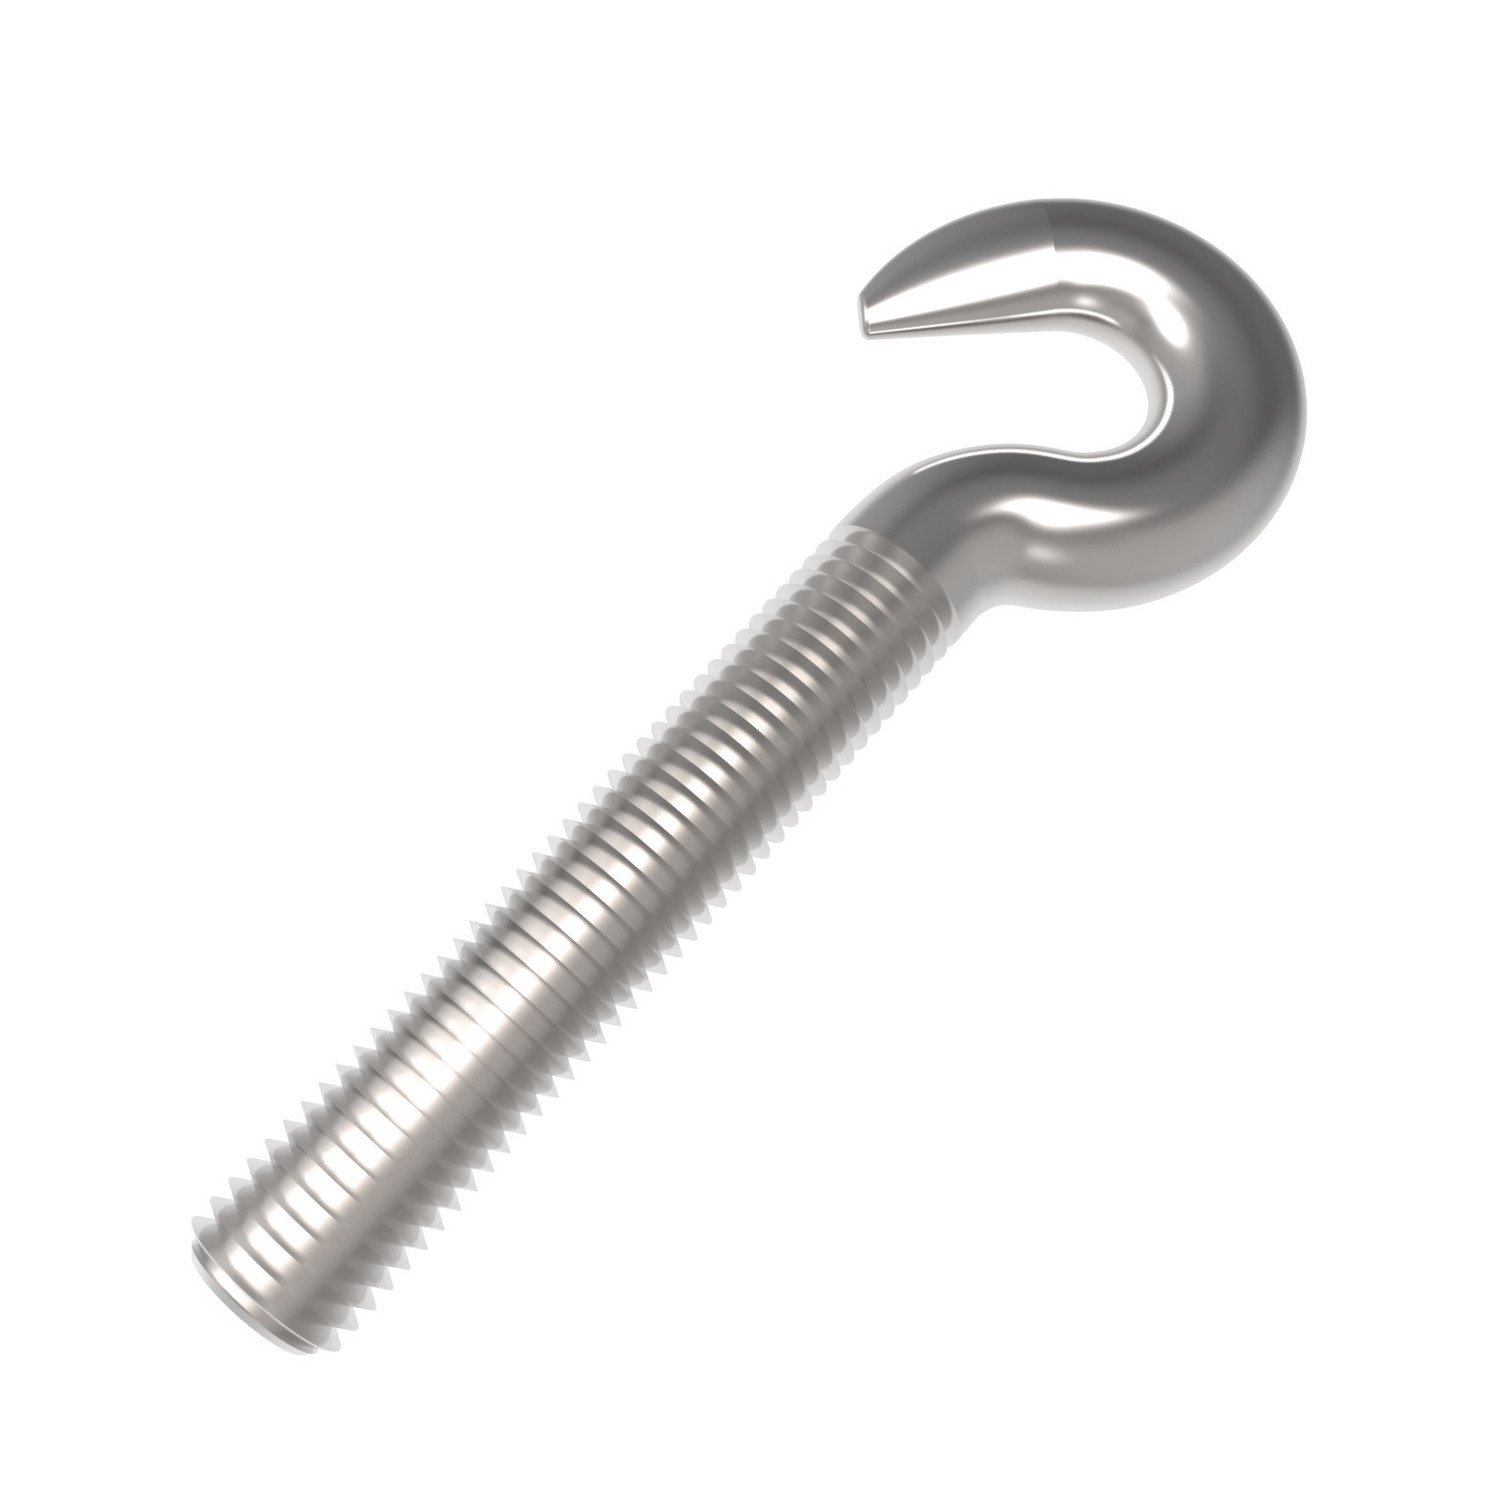 Product R3862, Hooks for Turnbuckles steel / 